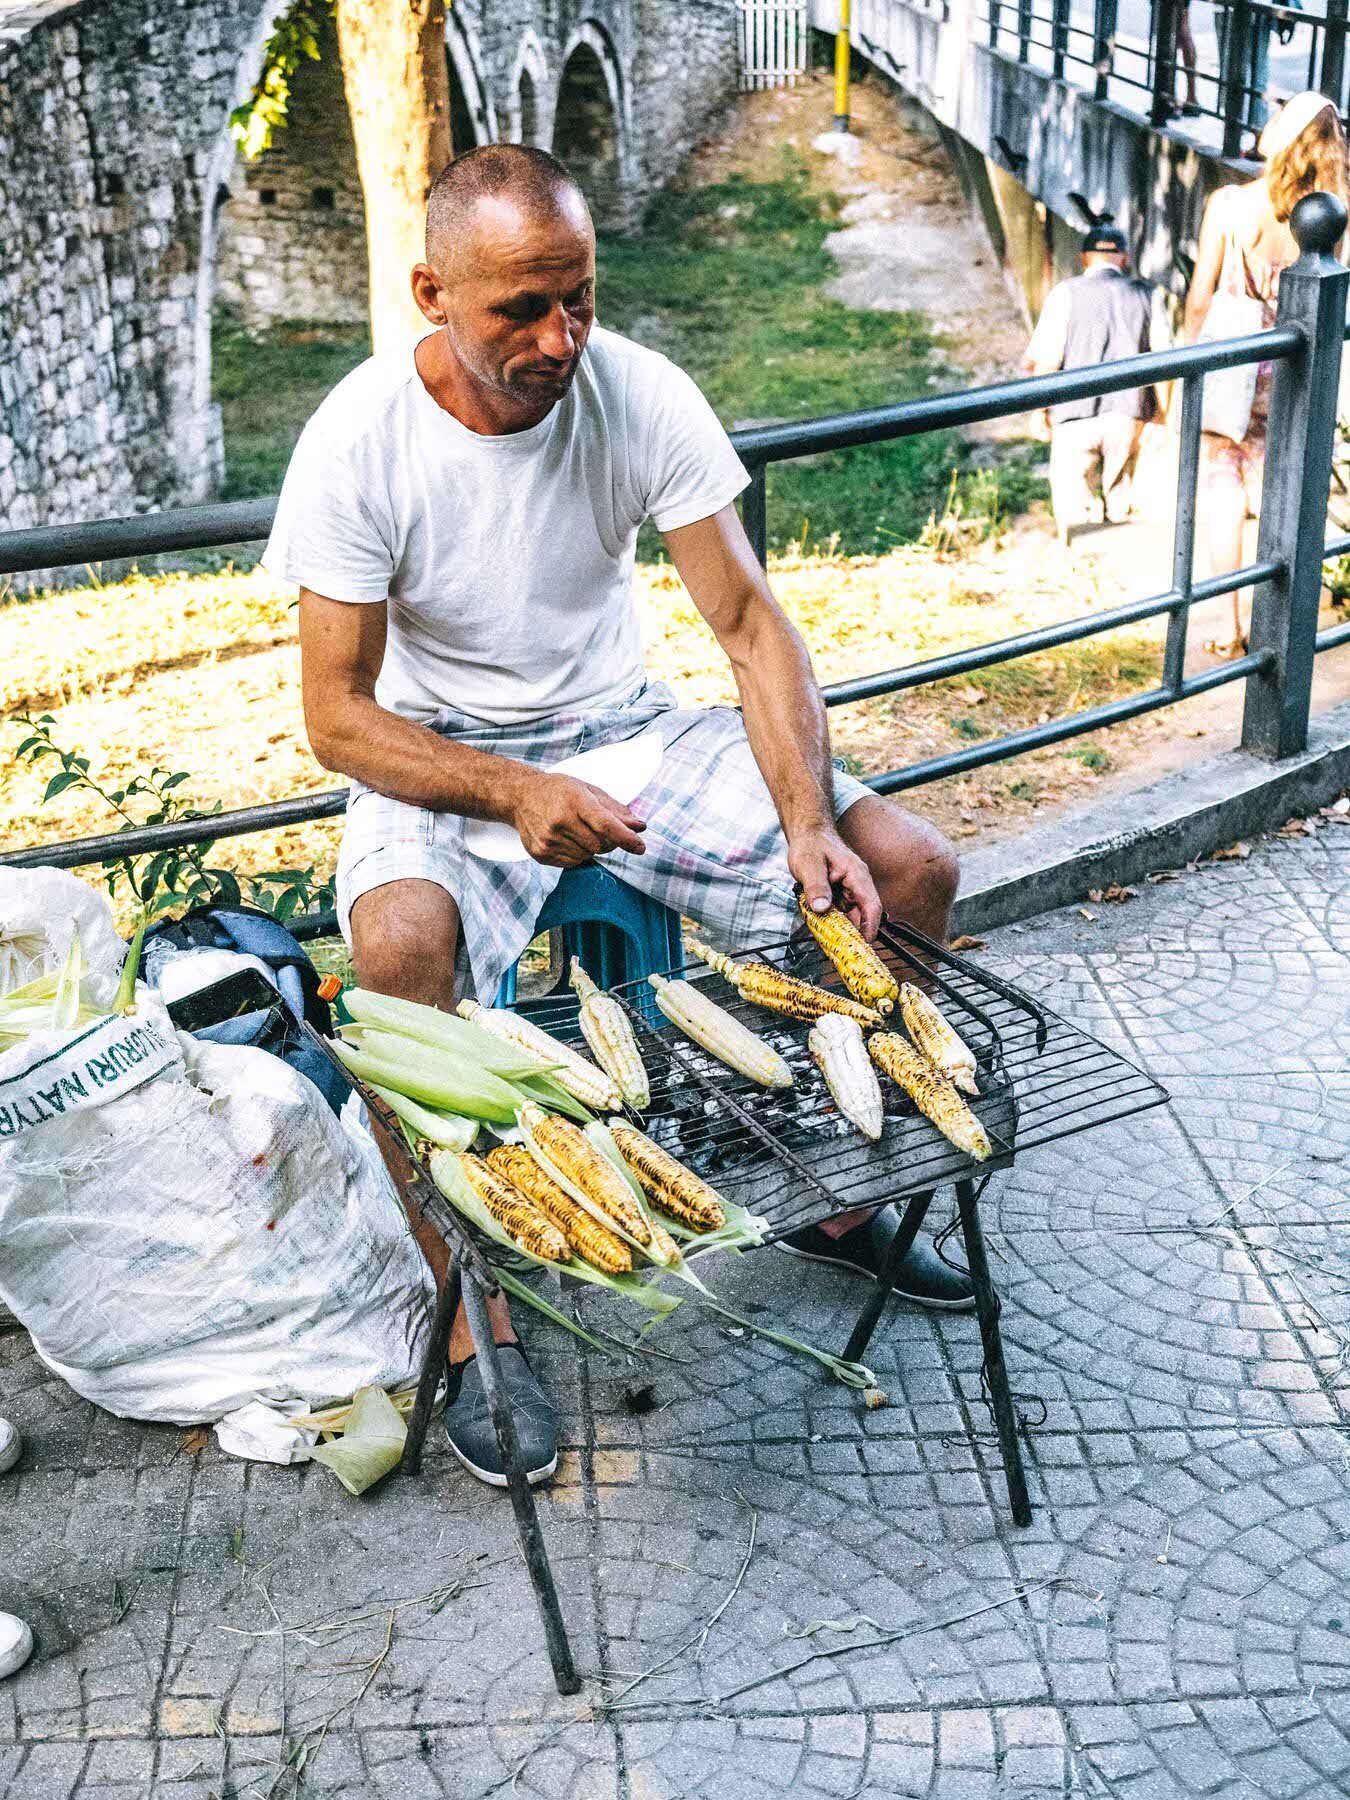 corn+vendor+on+street+of+tirana.jpeg